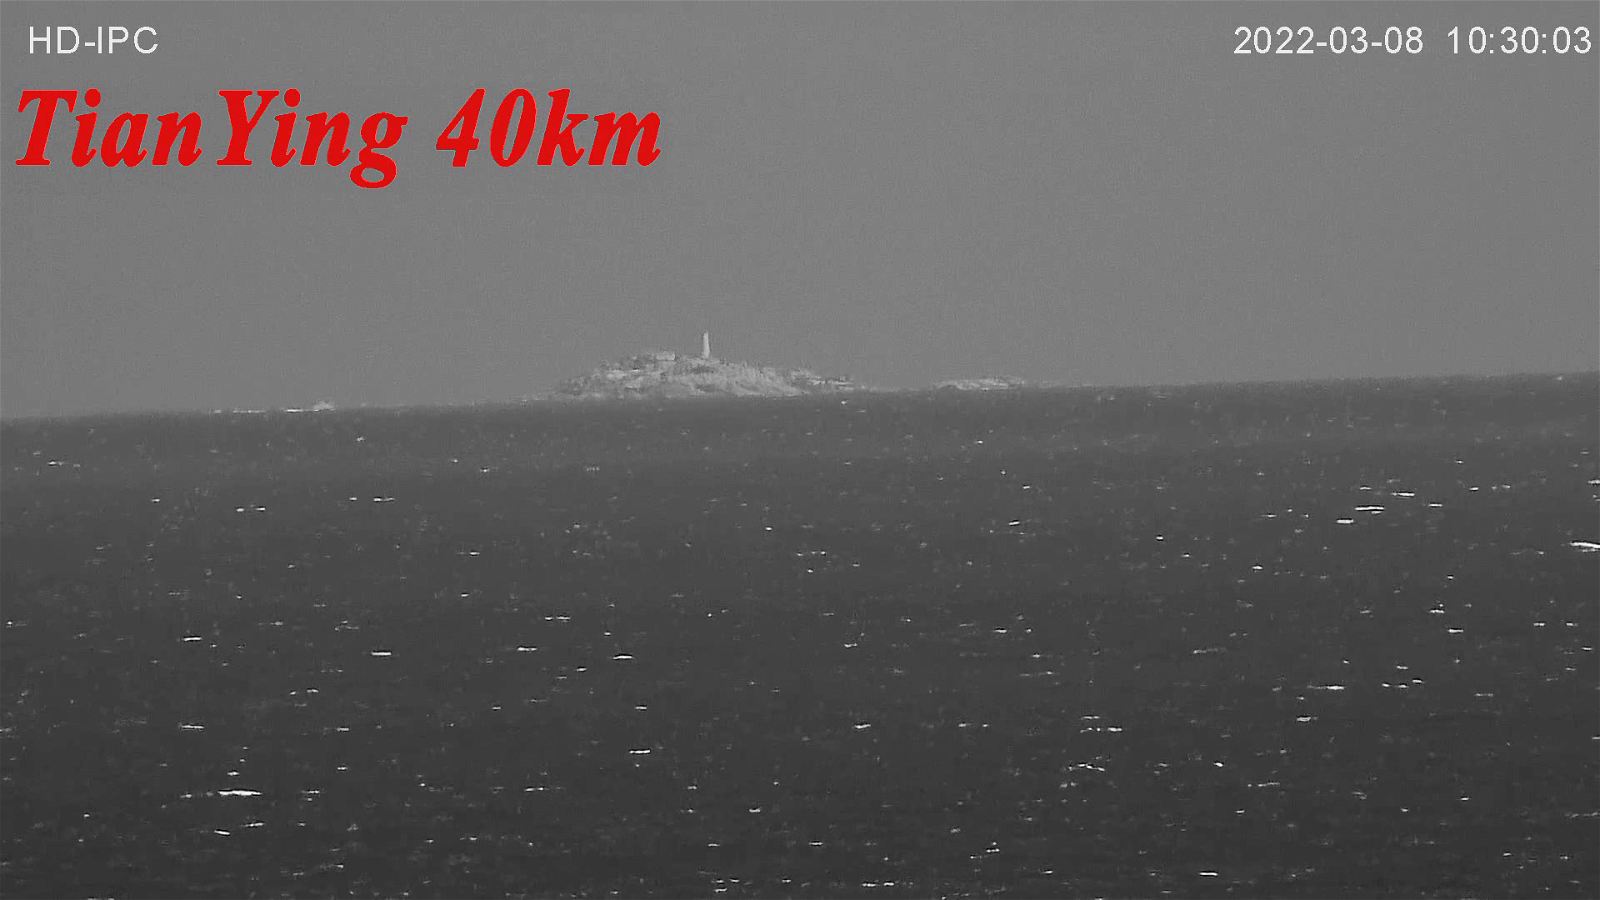 50km lighthouse HD 25~1200mm coaxial zoom IR cctv camera 2